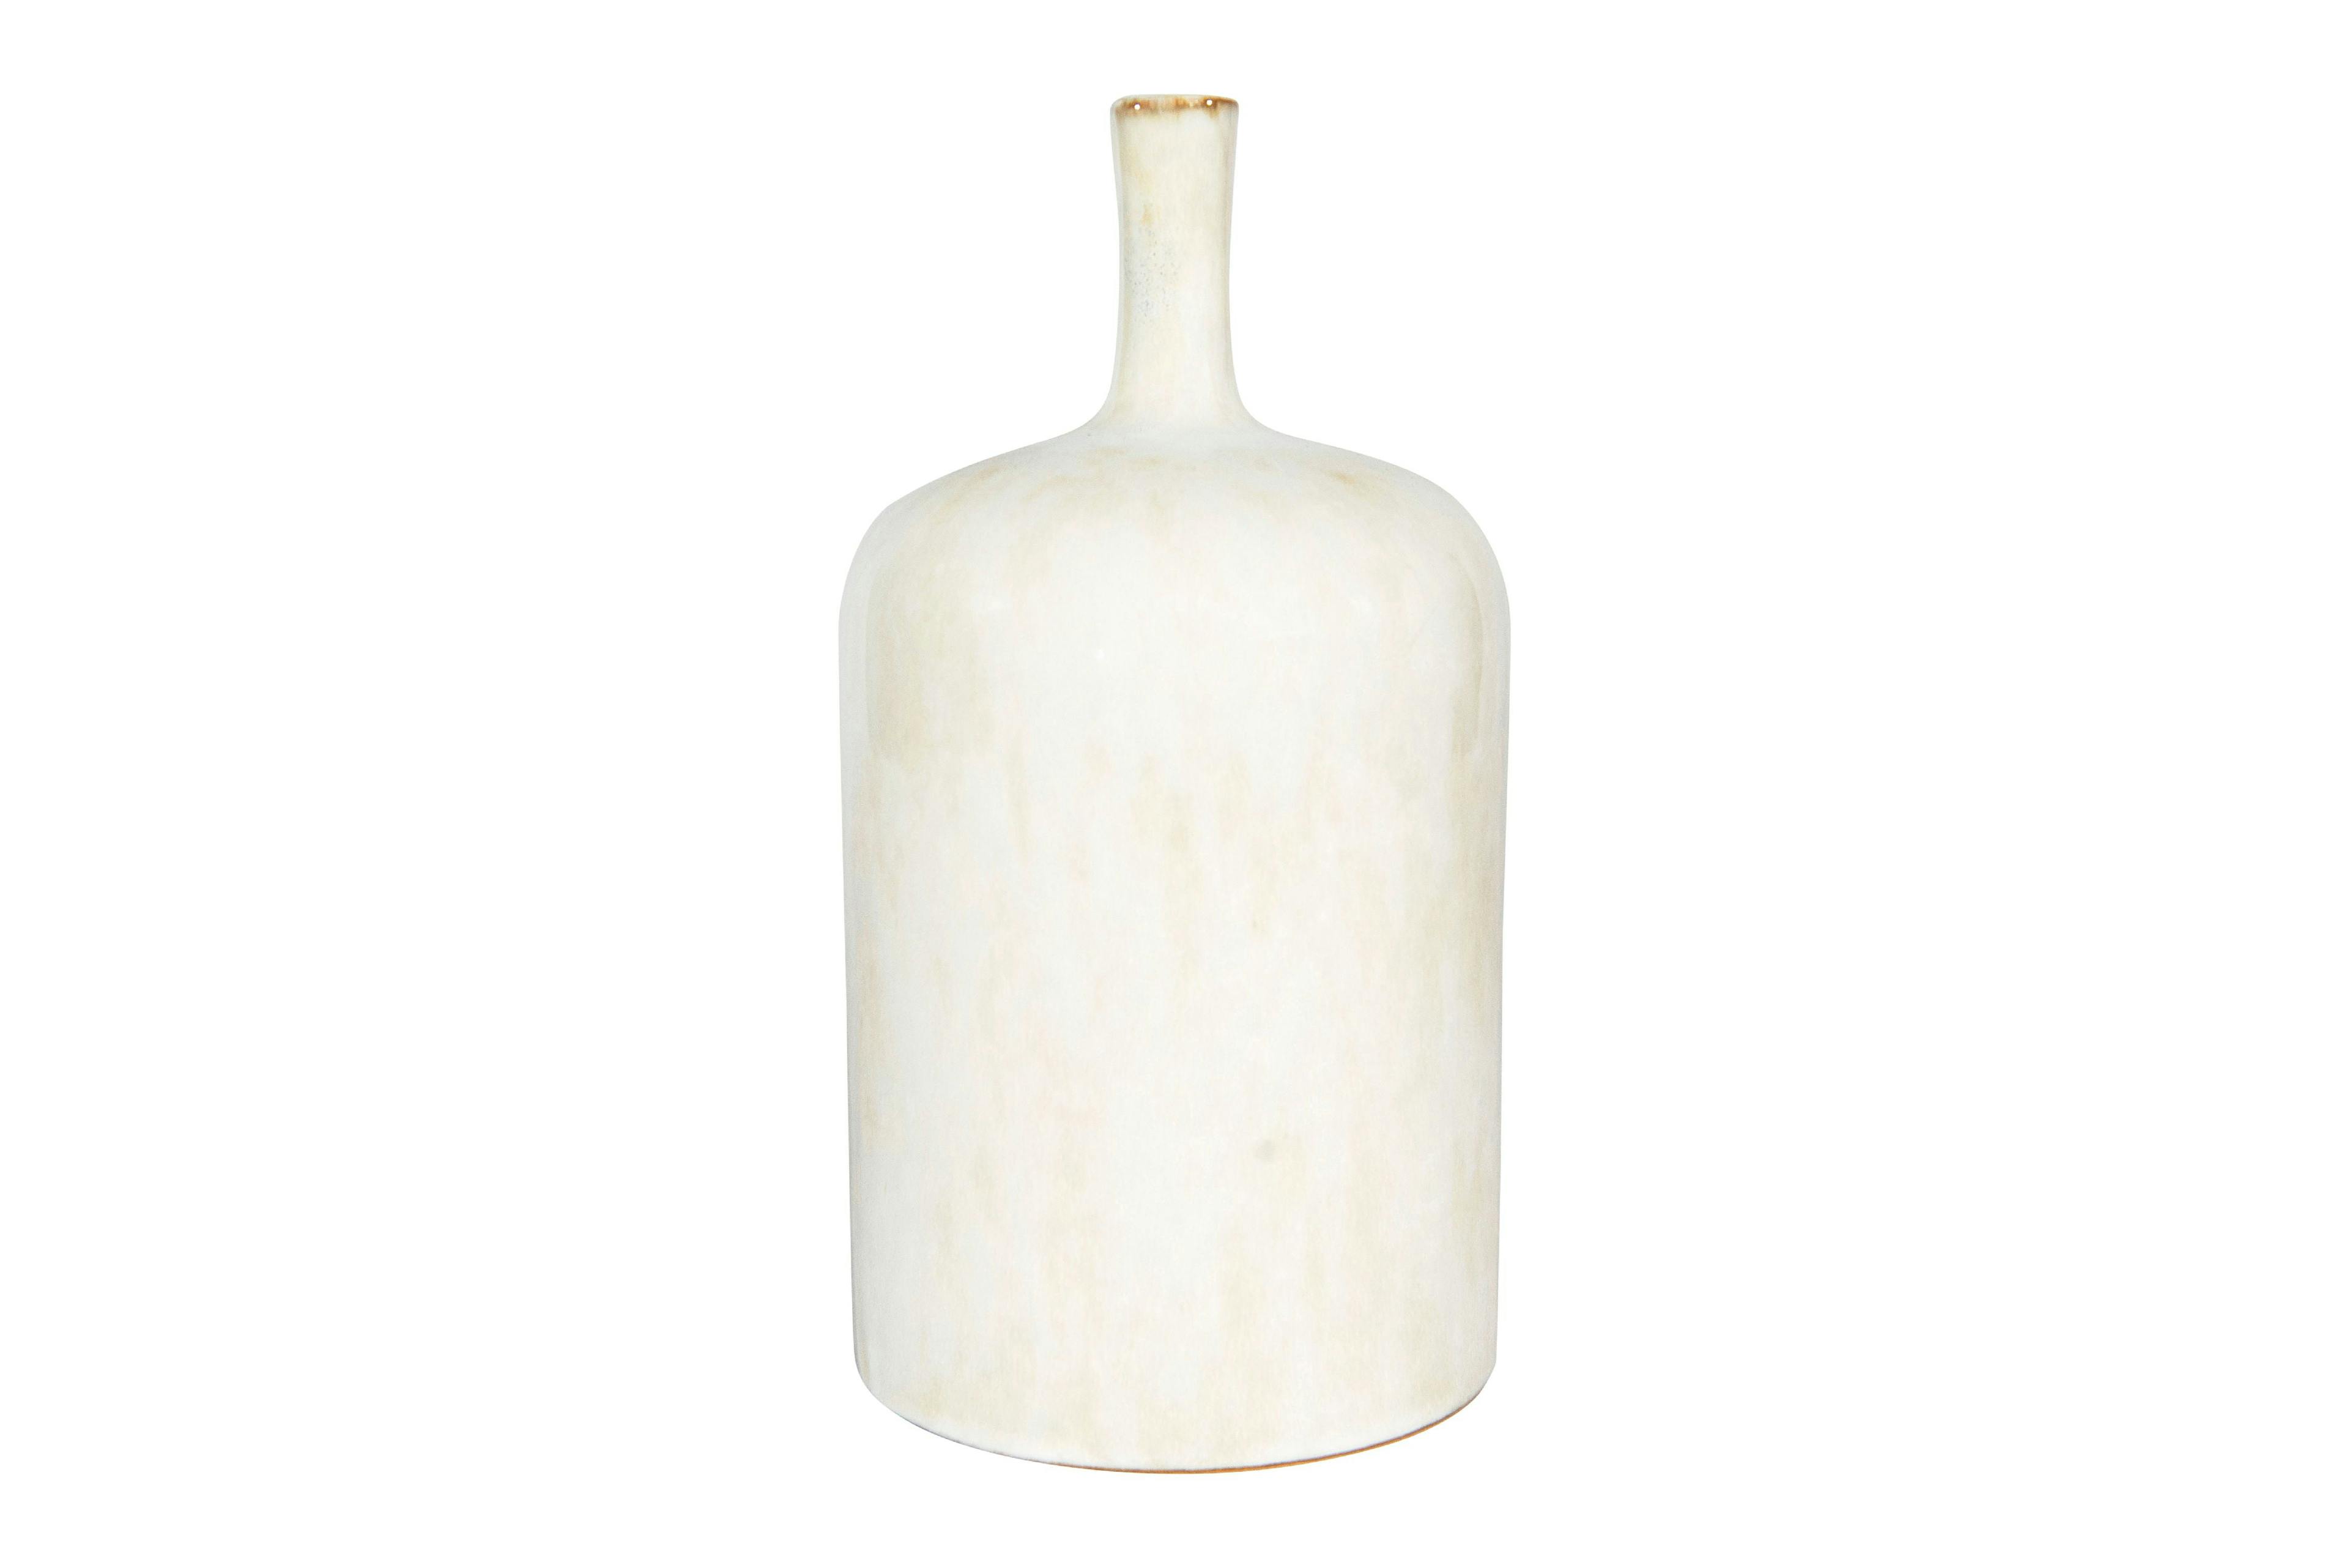 Cream Ceramic Stoneware Vase with Green Reactive Glaze Accents